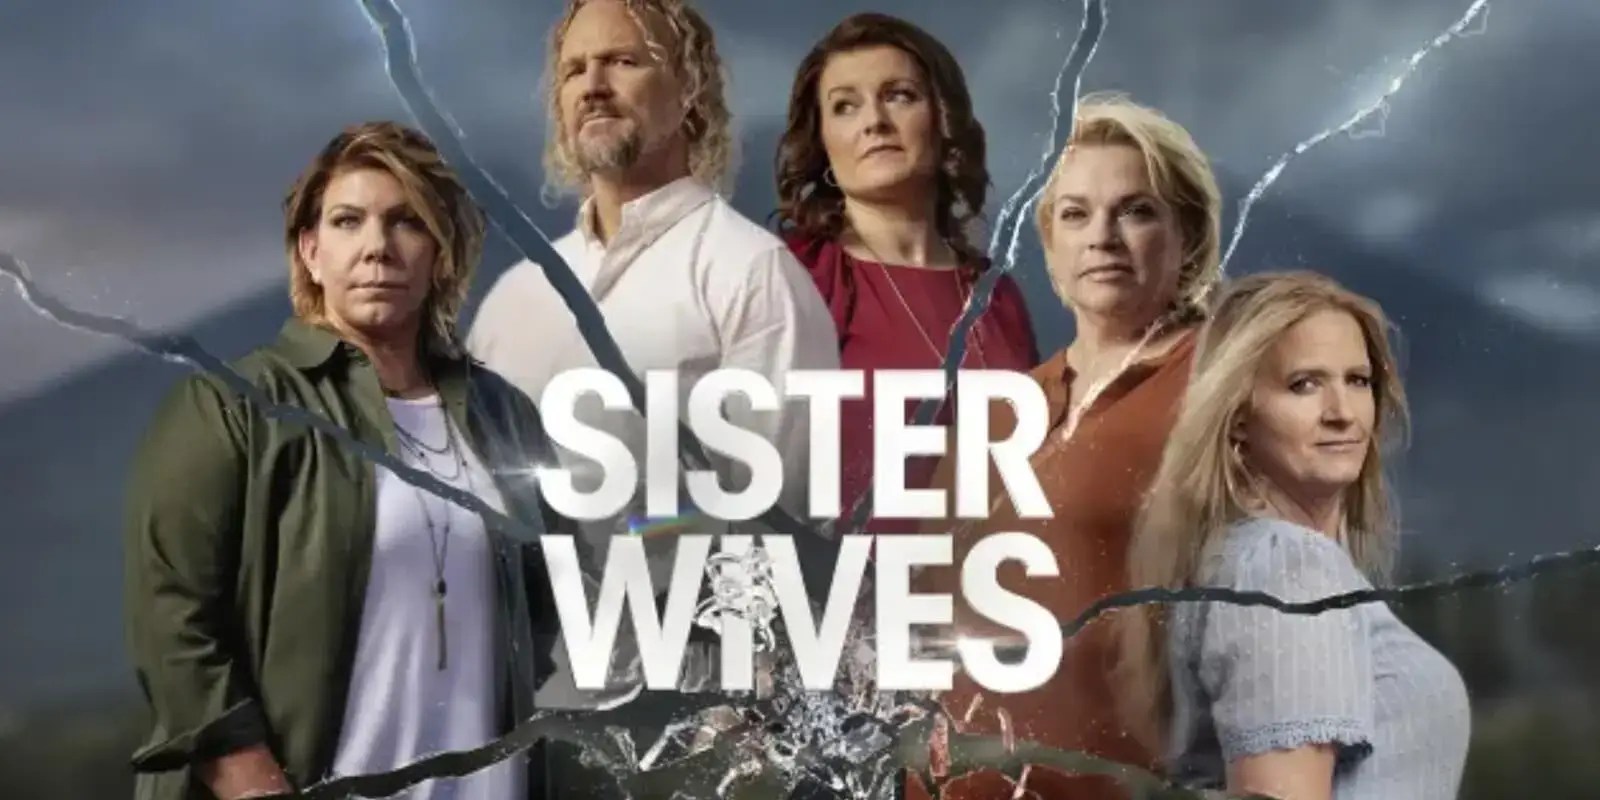 'Sister Wives' key art for season 18 of the TLC series.